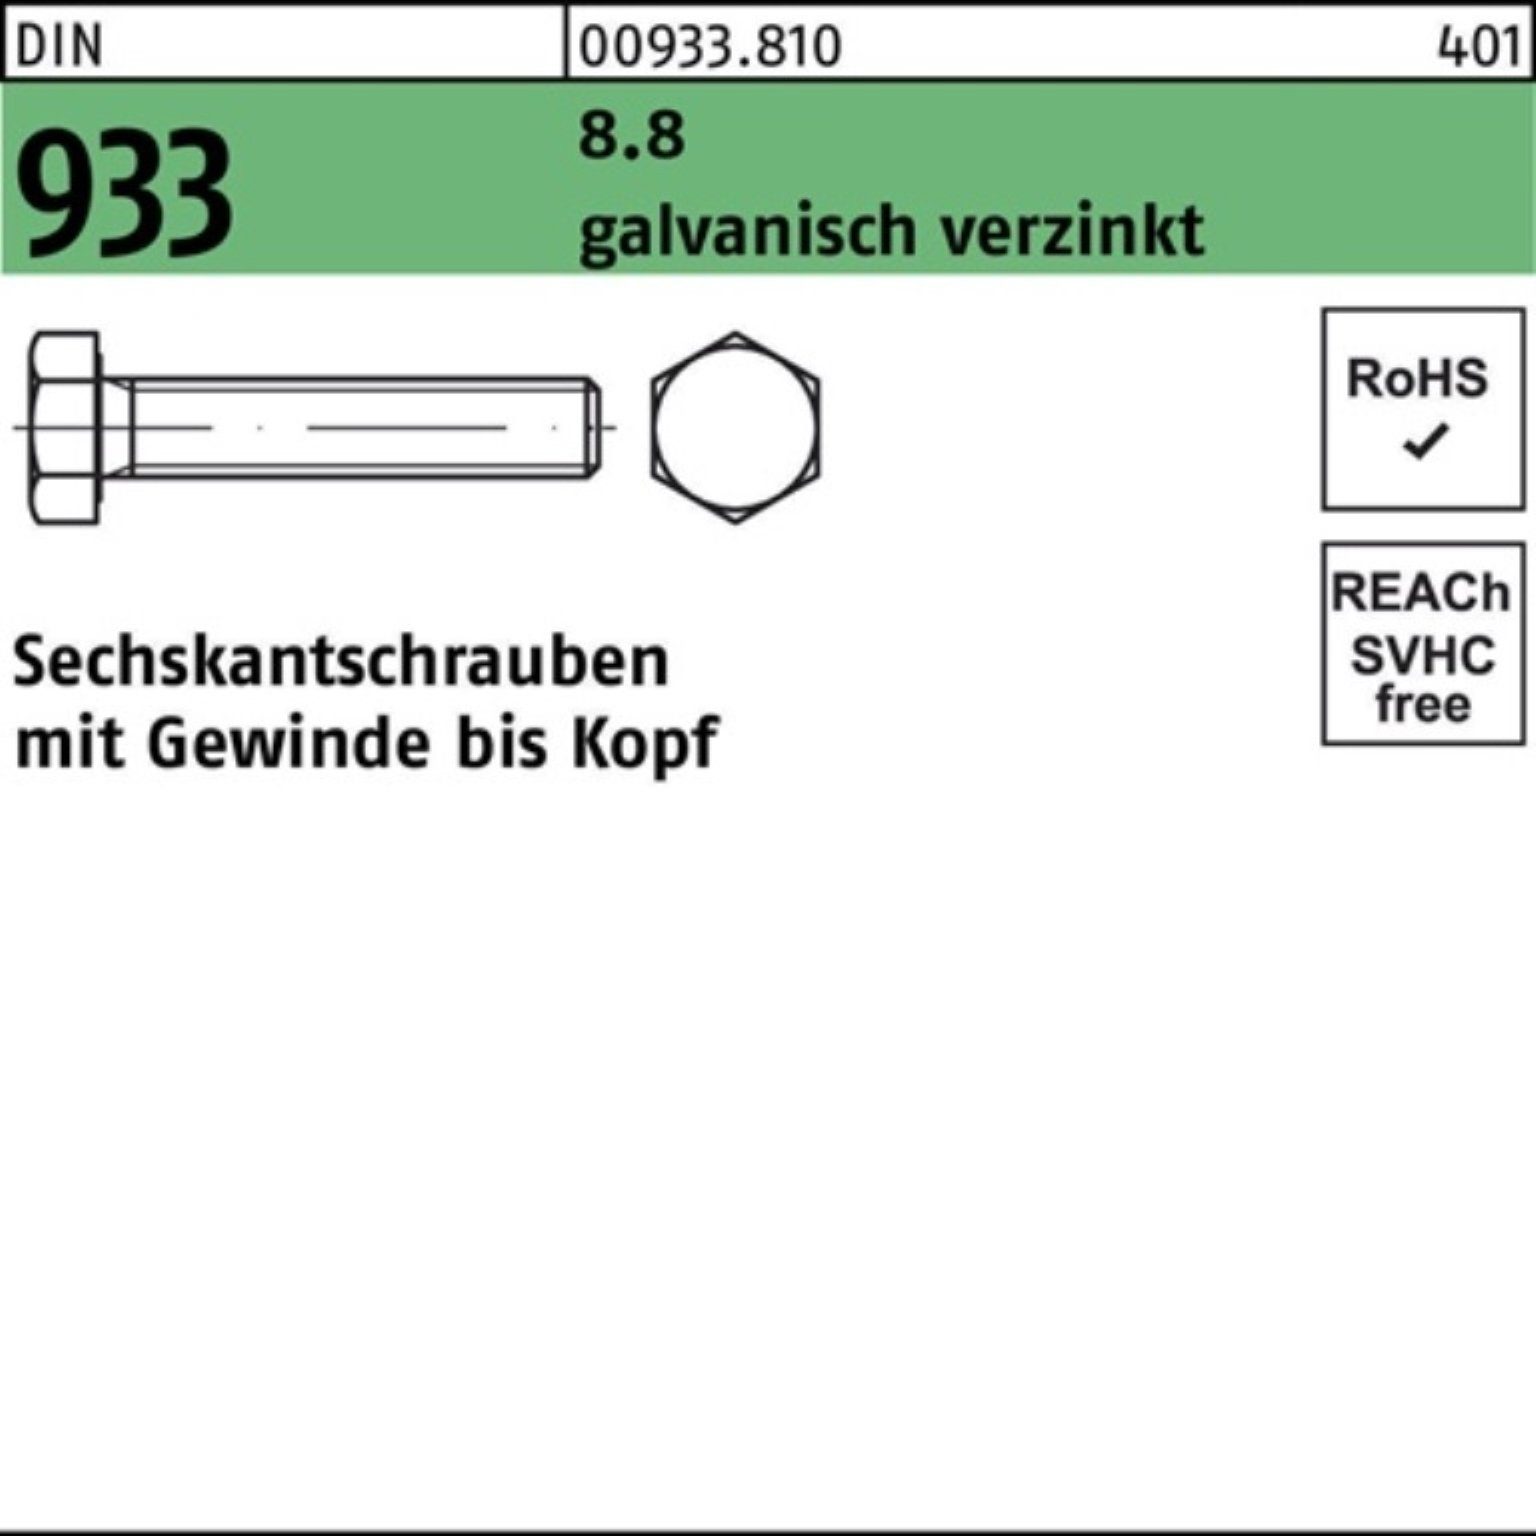 Reyher Sechskantschraube 100er Sechskantschraube 1 8.8 320 VG galv.verz. Pack 933 M24x DIN Stü